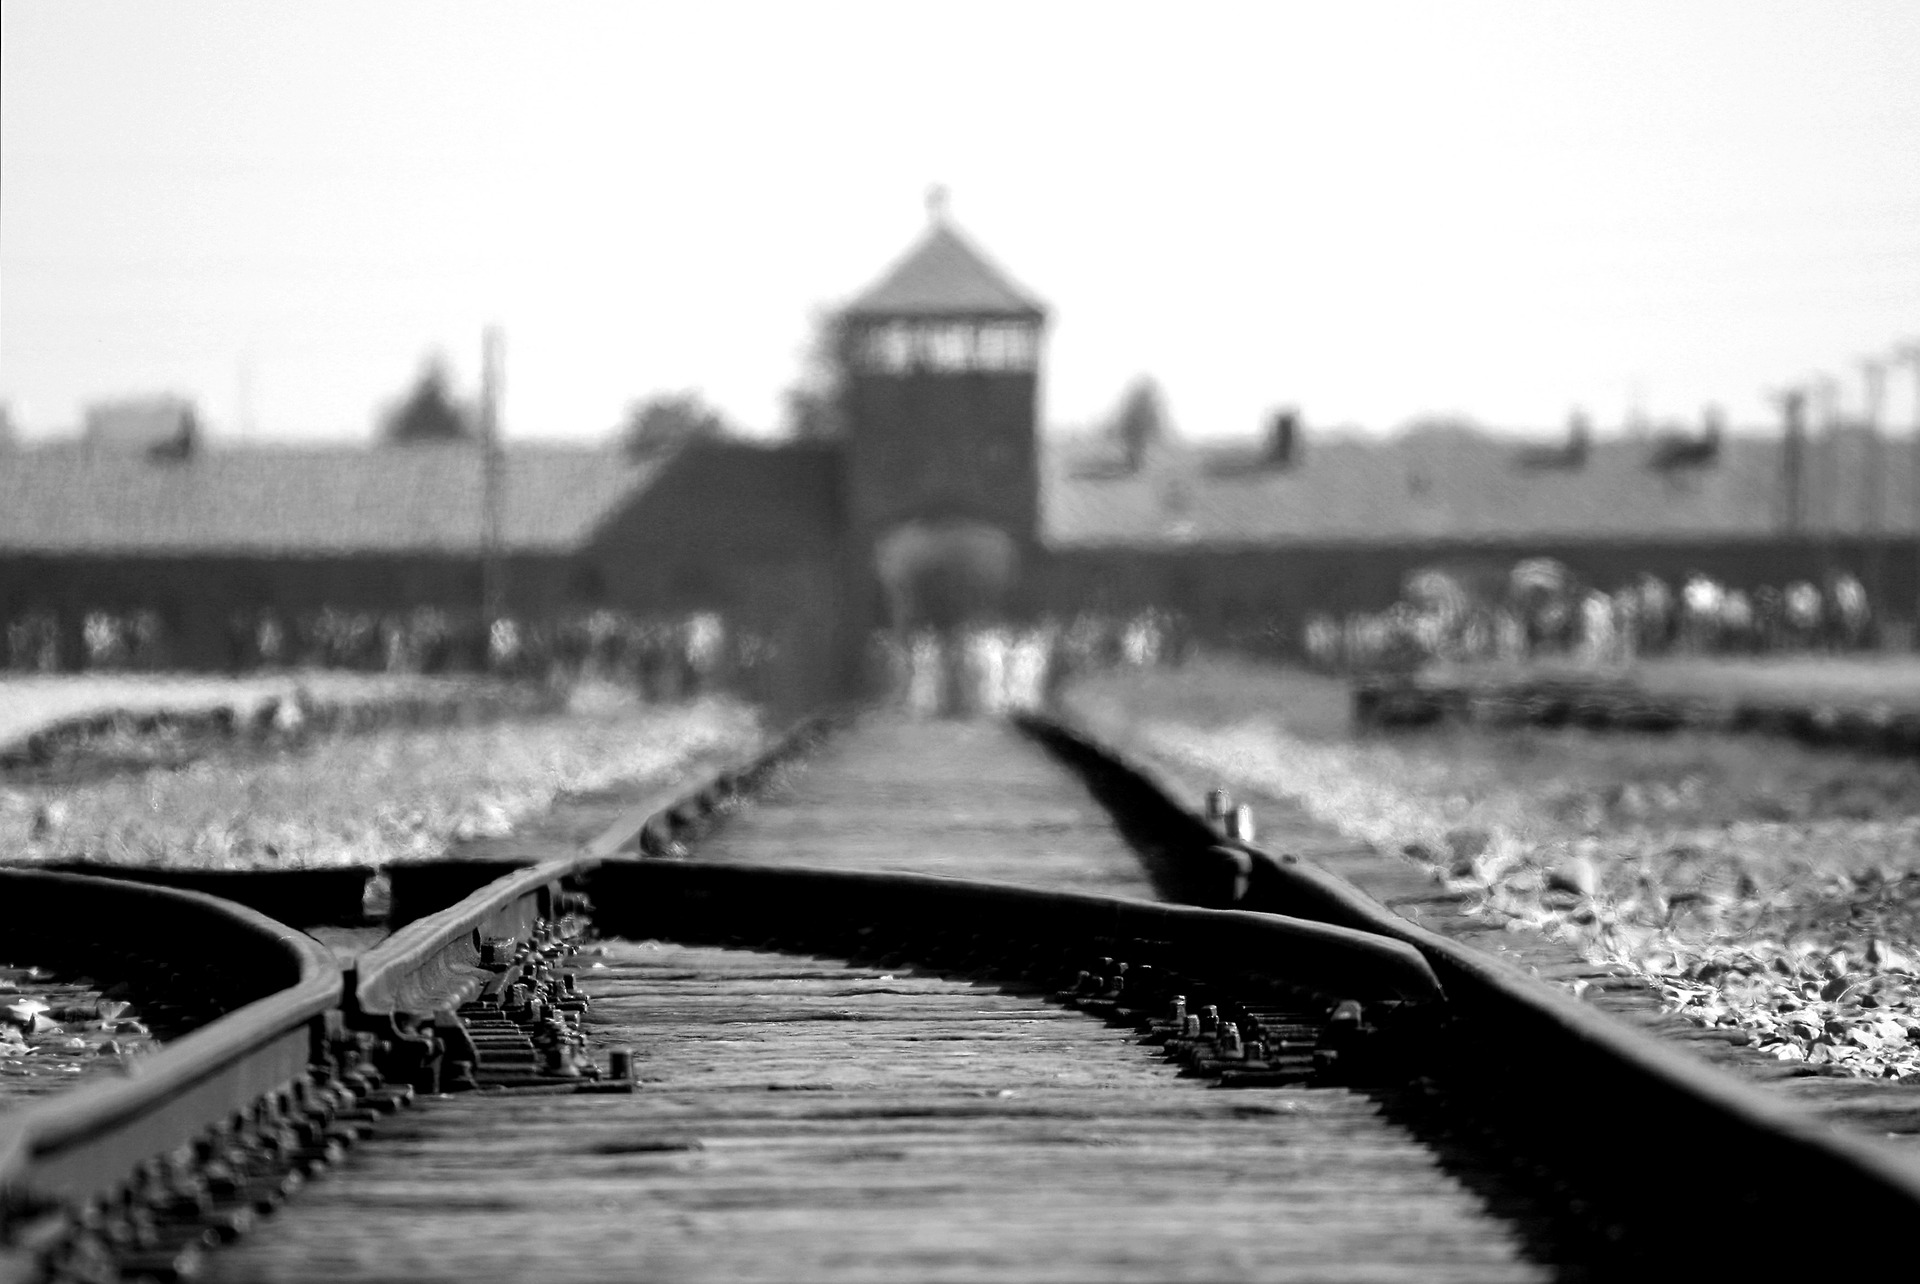 #WEREMEMBER internationaler Holocaustgedenktag 27. Januar